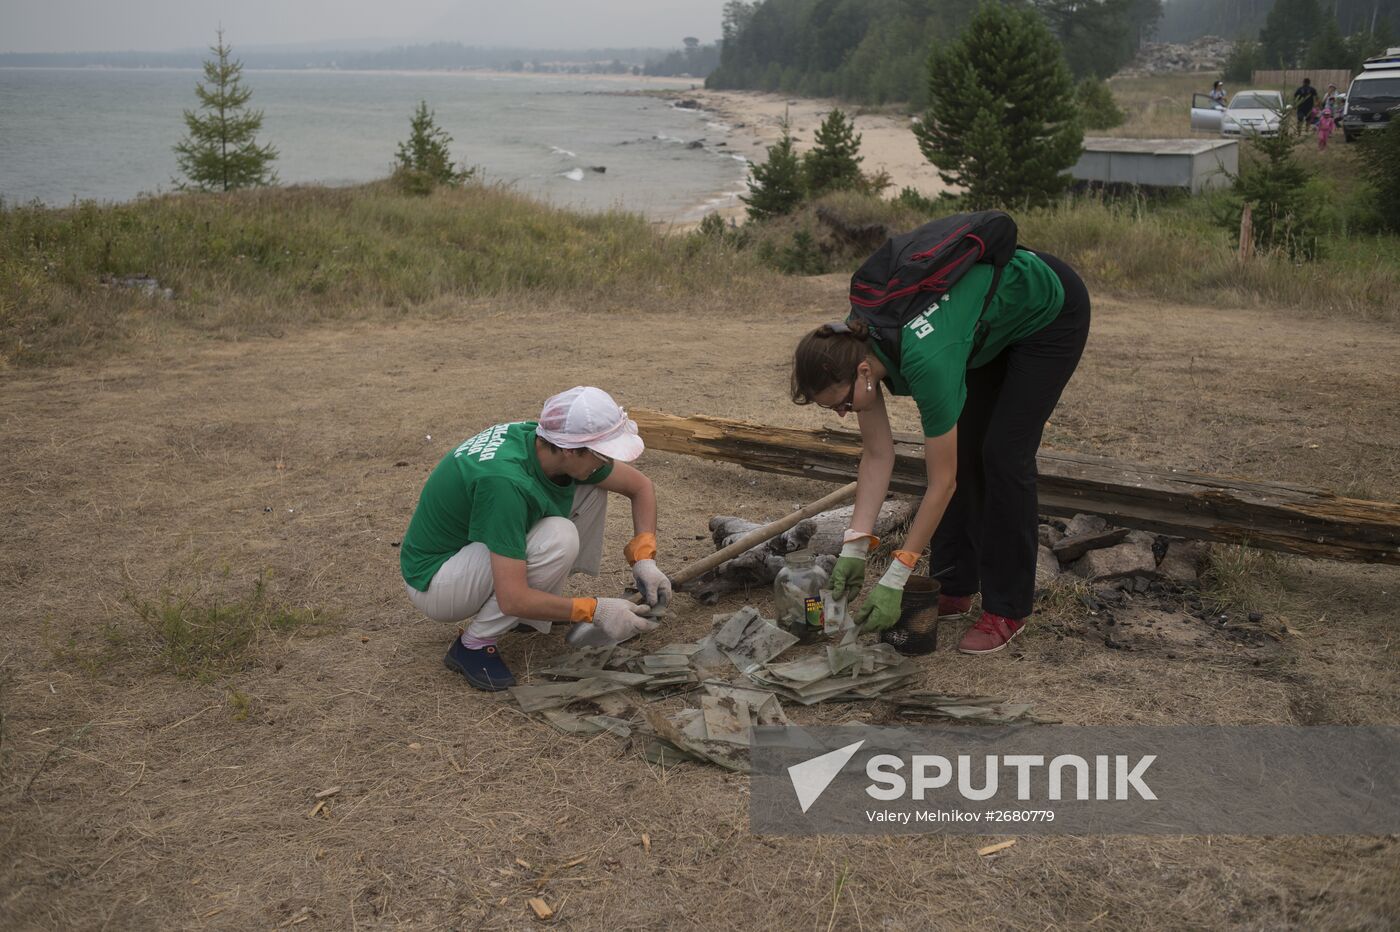 Baikal volunteer shore service